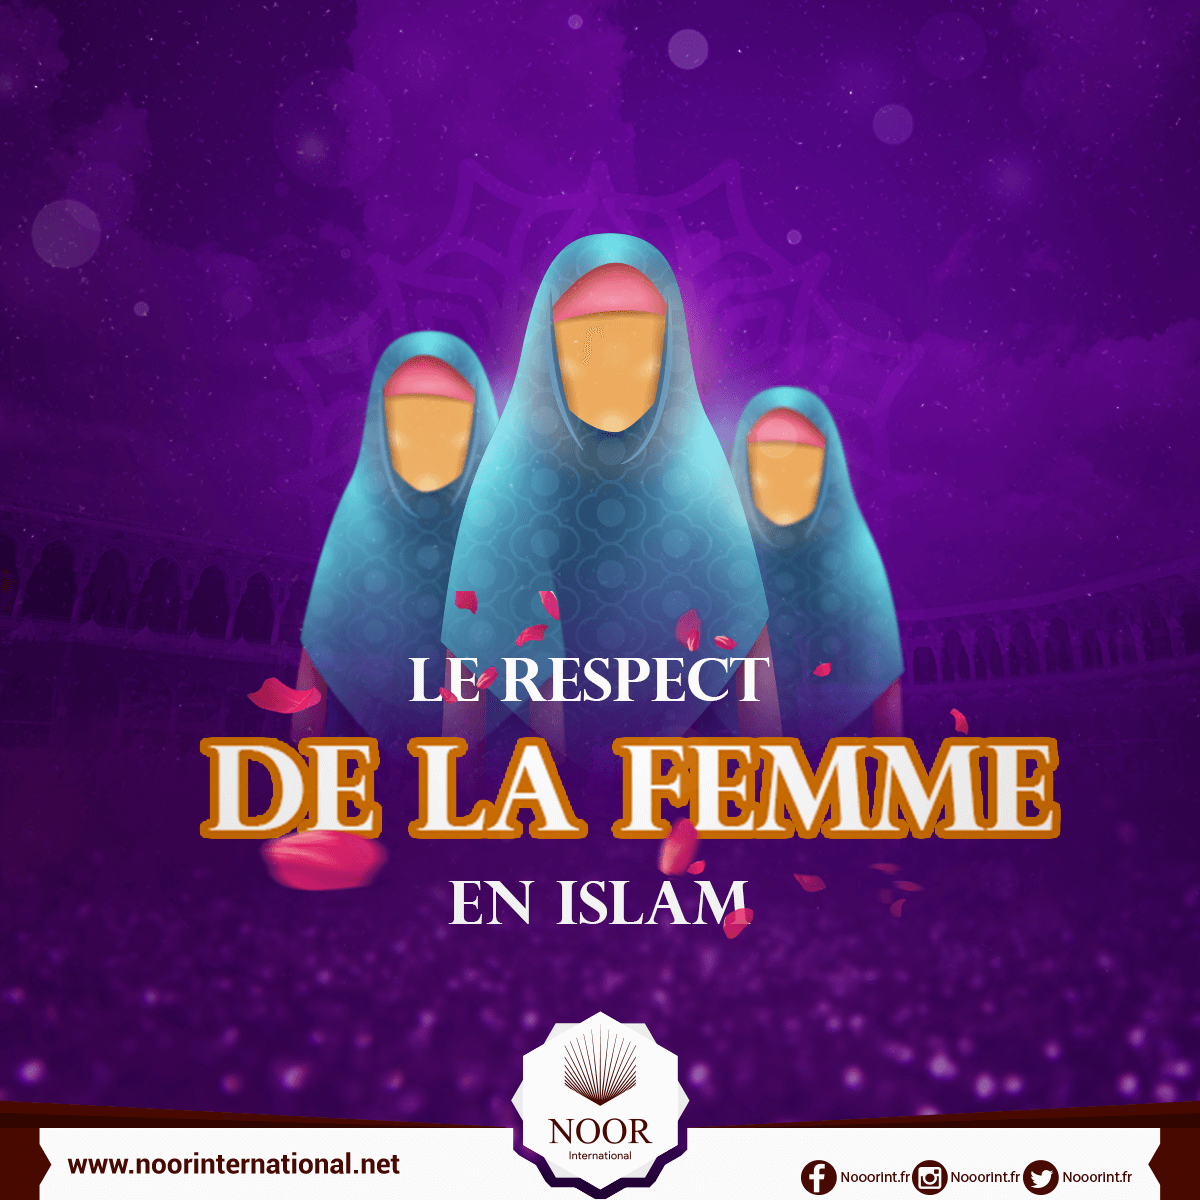 Le respect de la femme en islam